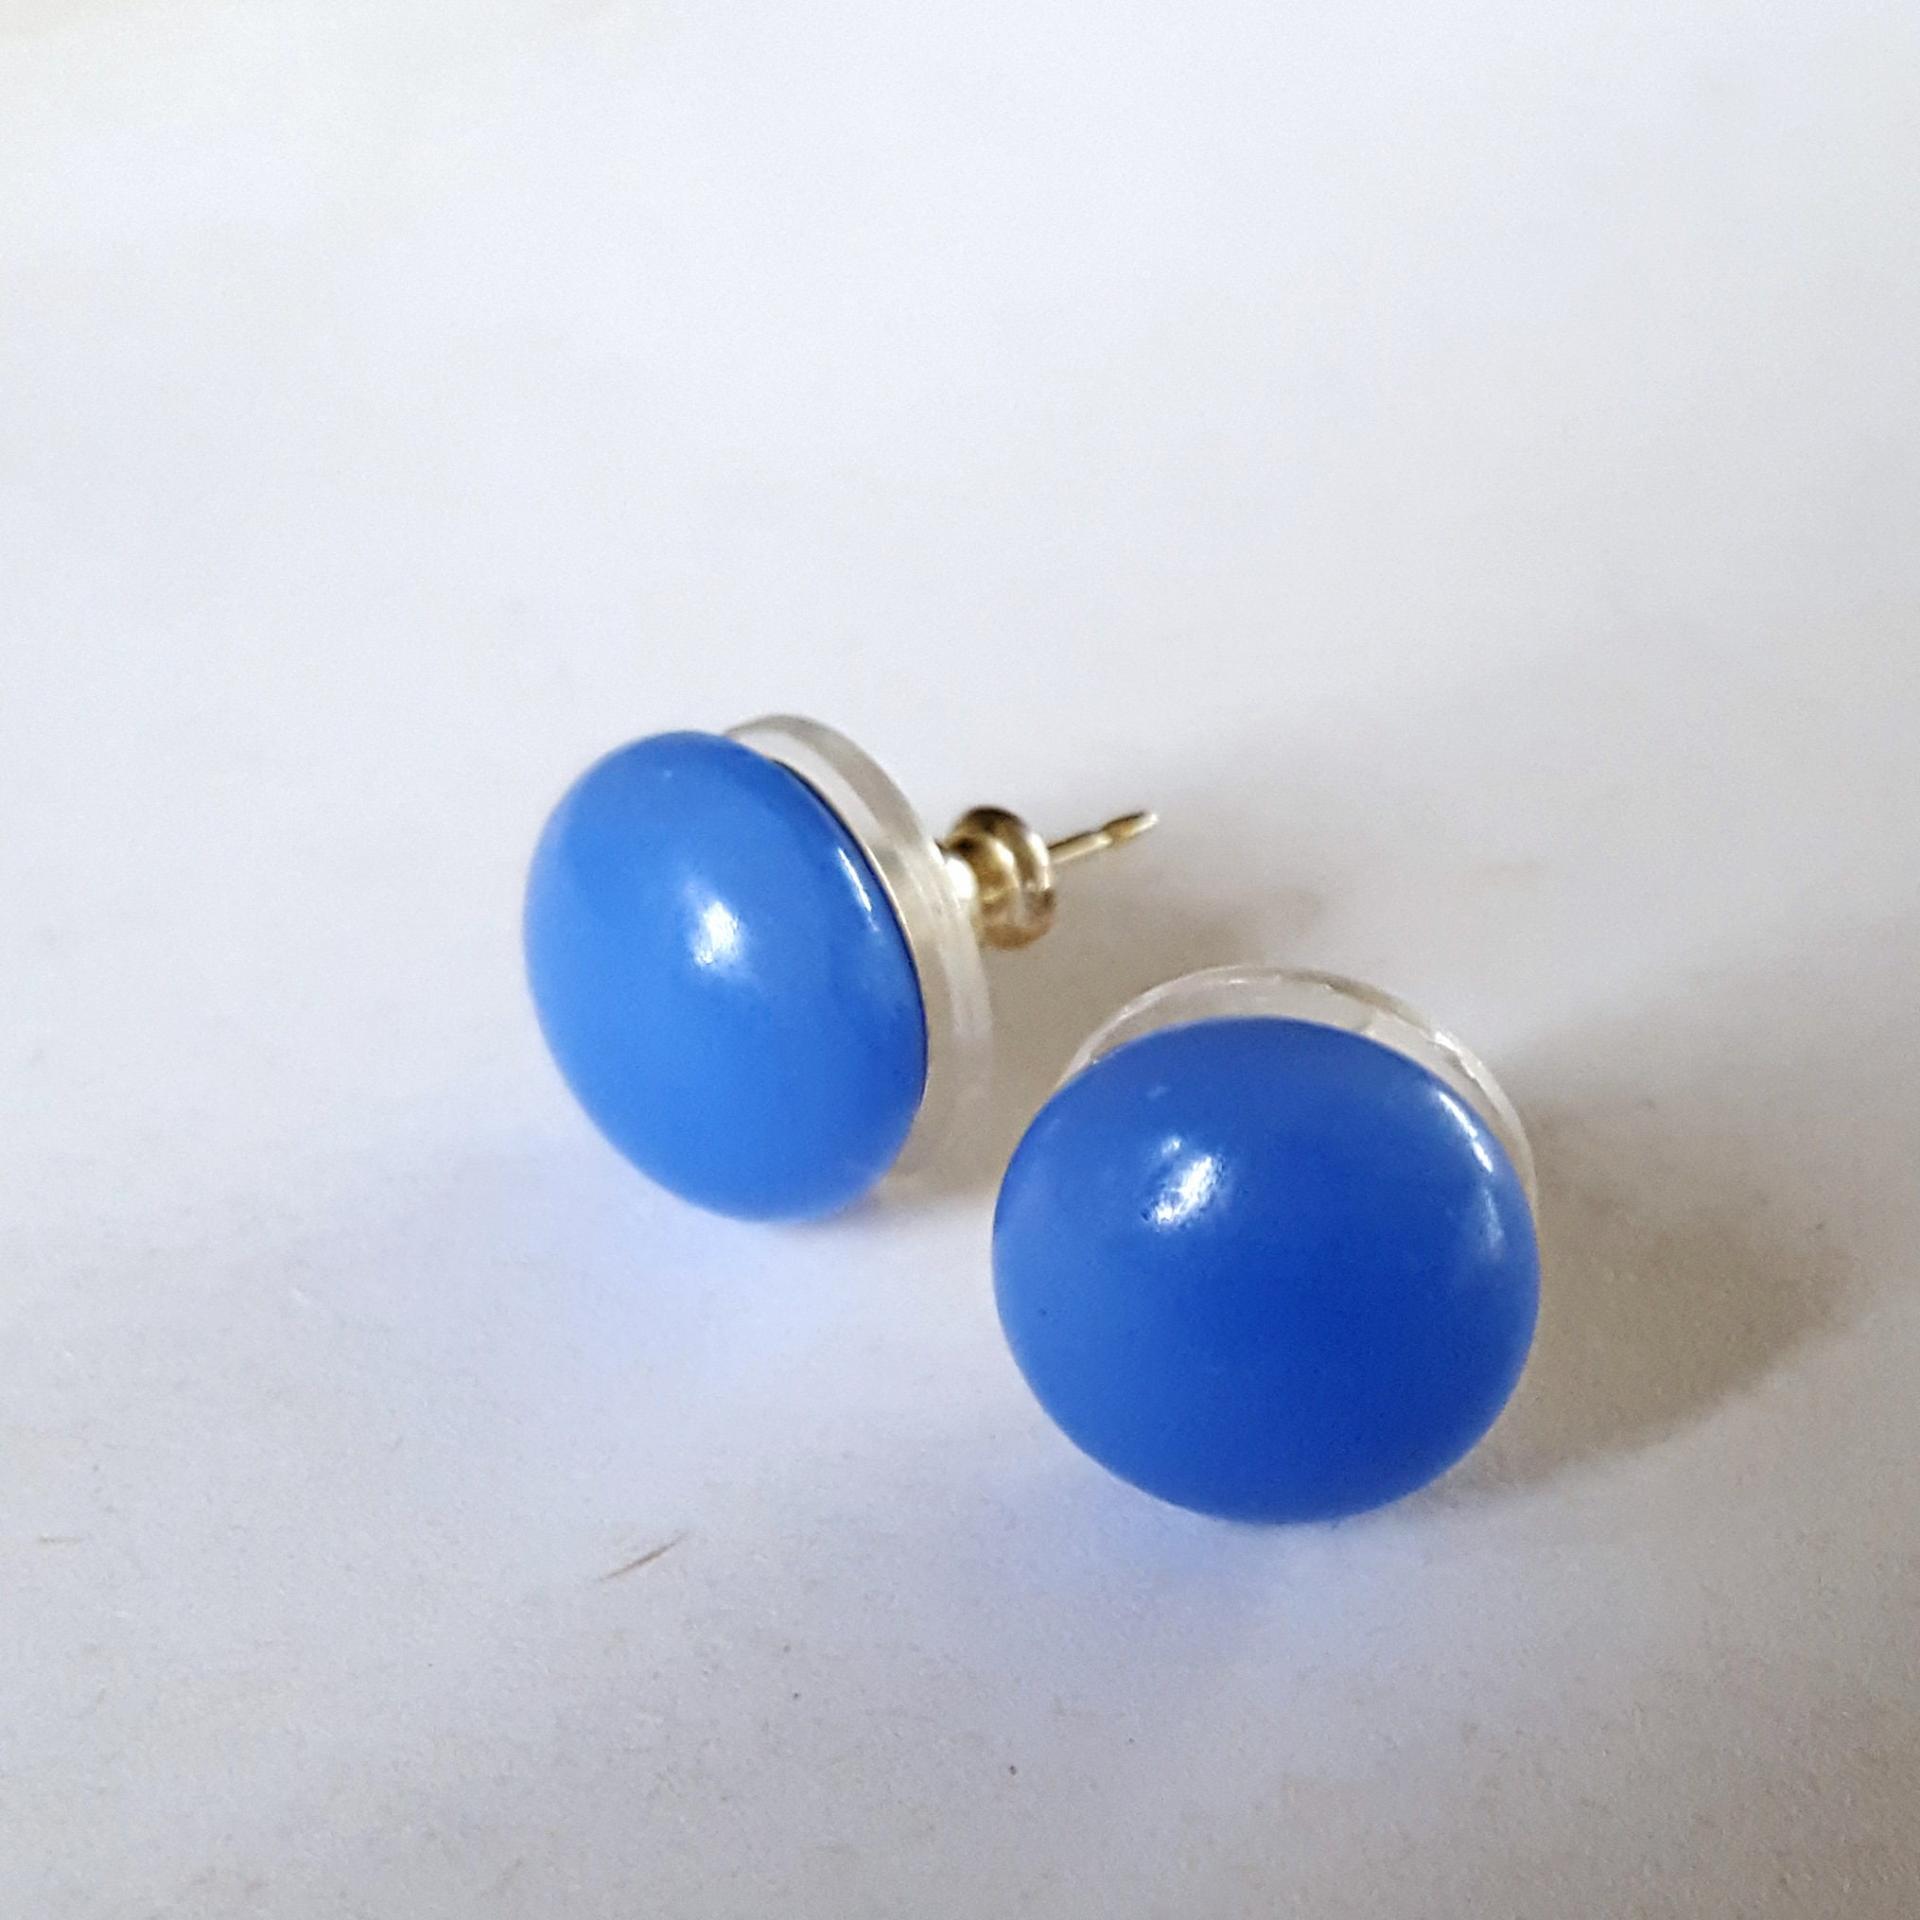 Azure Blue Stud Earrings, Sterling Silver Posts, Fused Glass